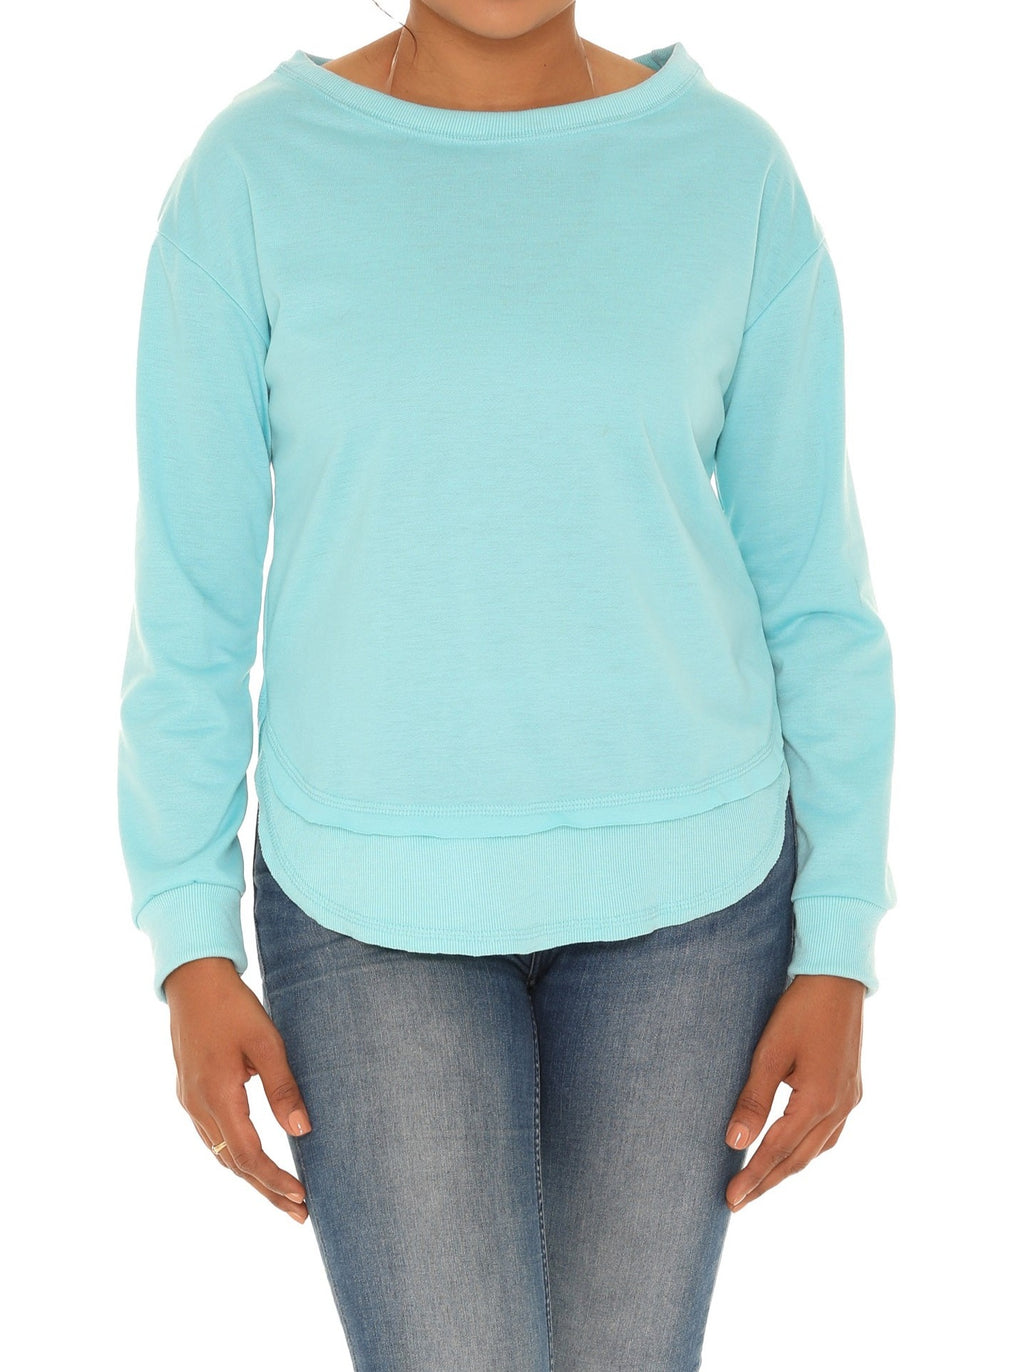 Turq Crewneck Sweatshirt - Shoreline Wear, Inc.